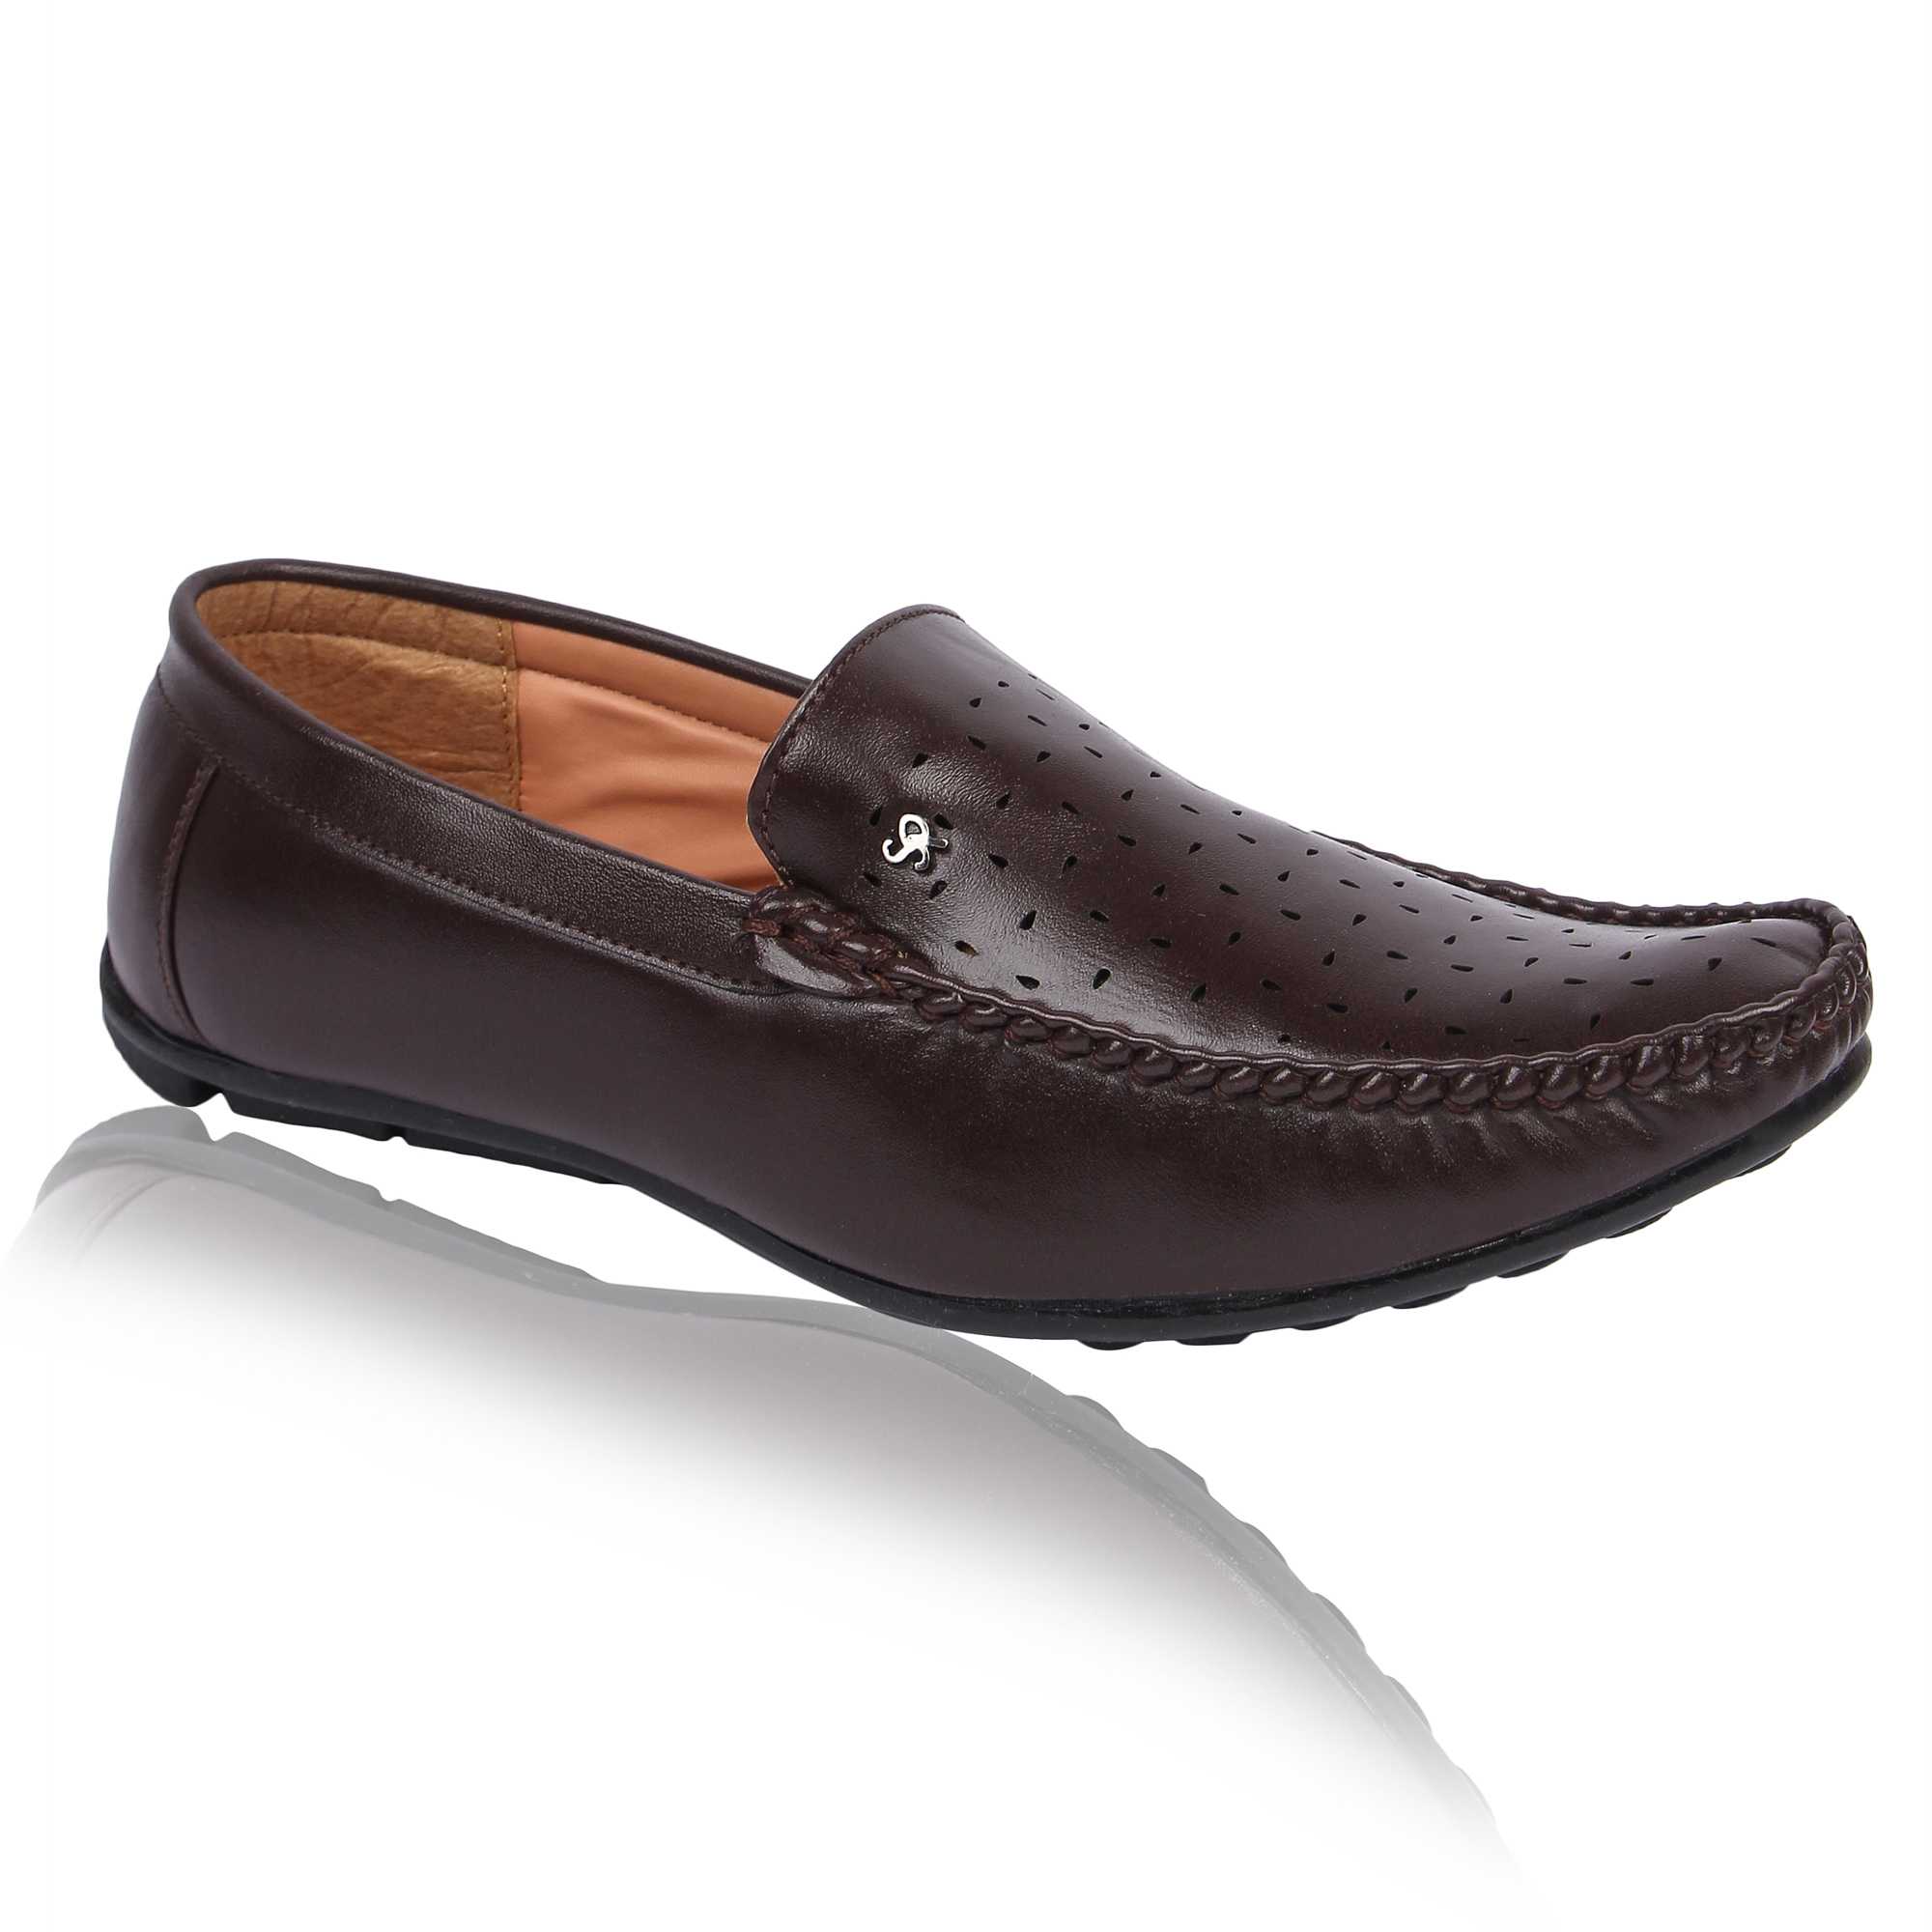 SG 011 Brown | Online Store for Men Footwear in India